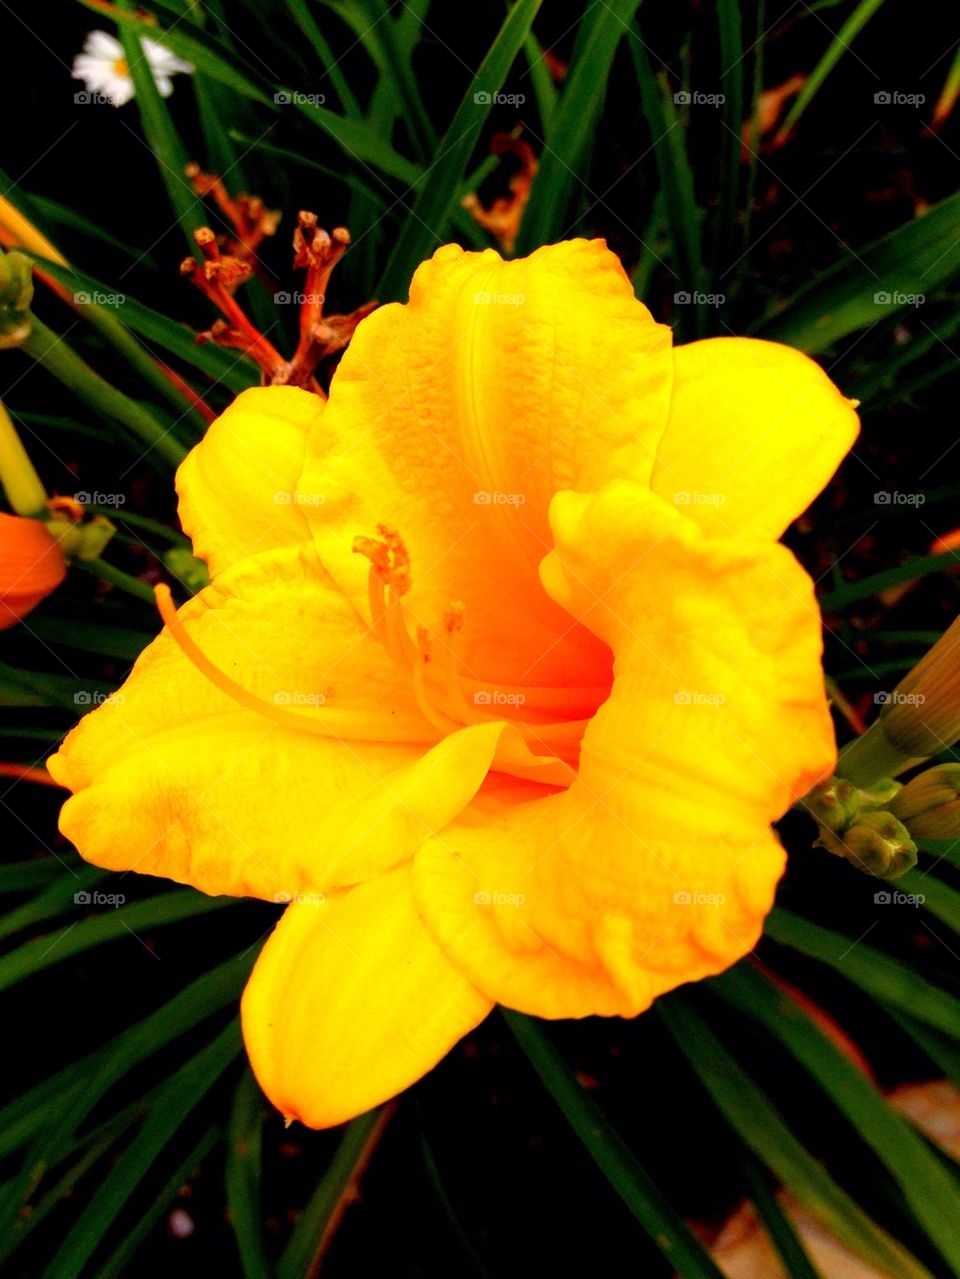 garden yellow flower summer by brendon.hivner